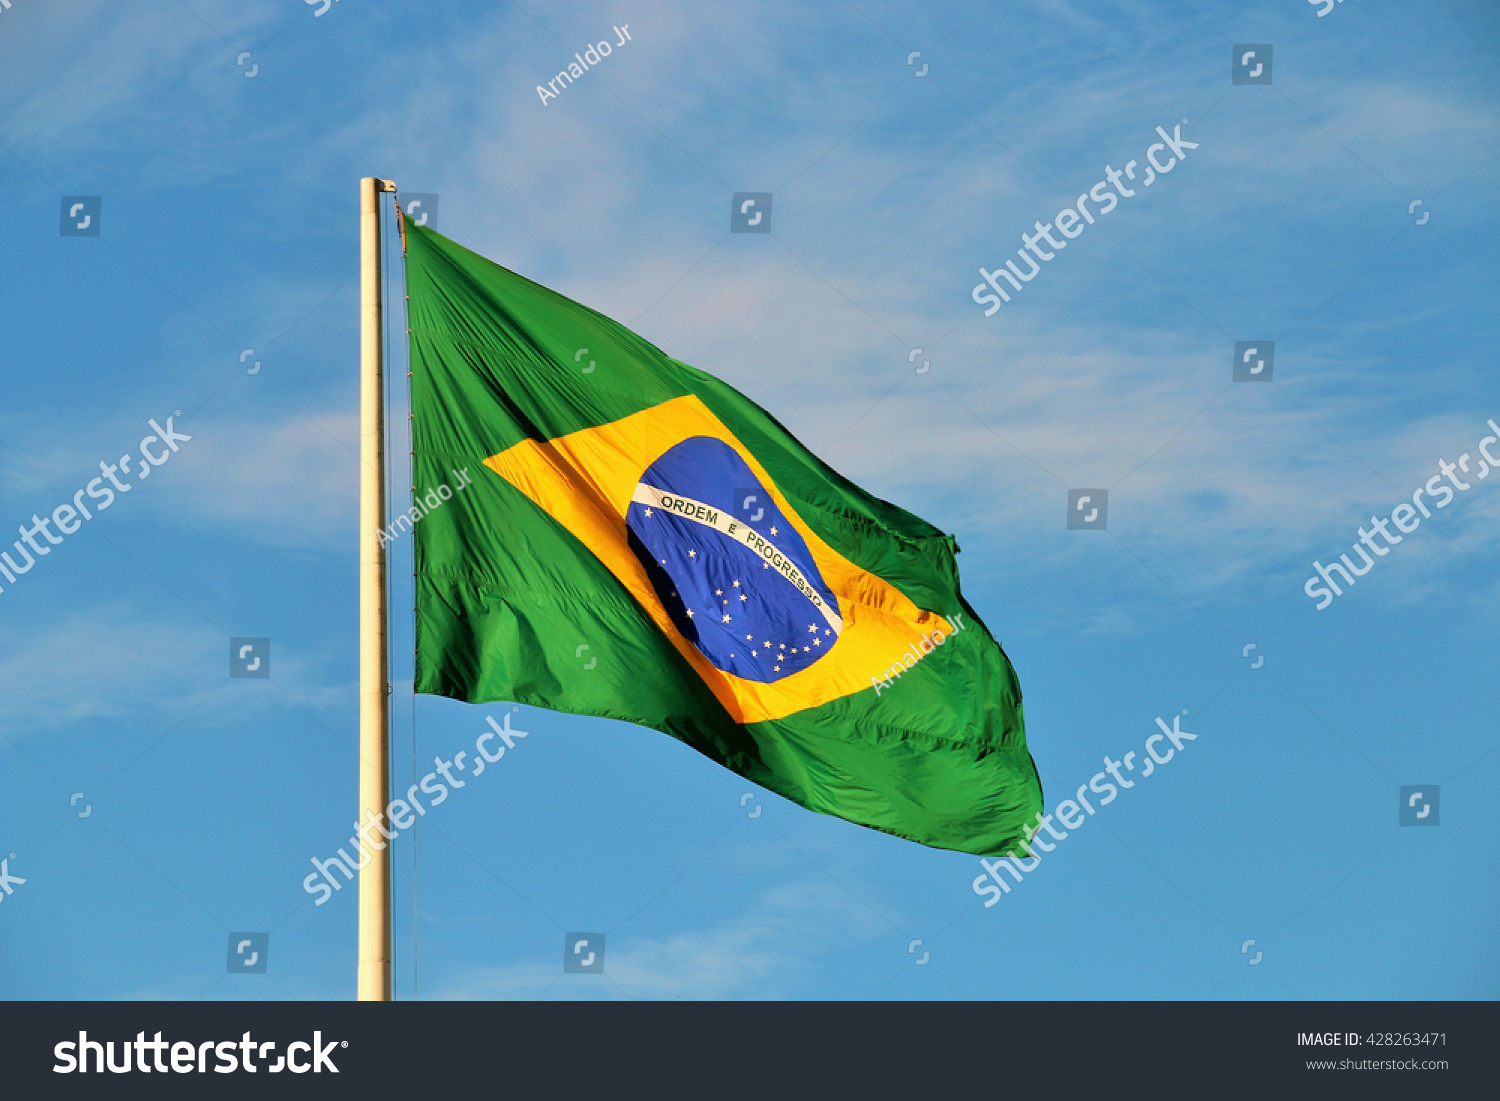 Brazilian flag waving #428263471